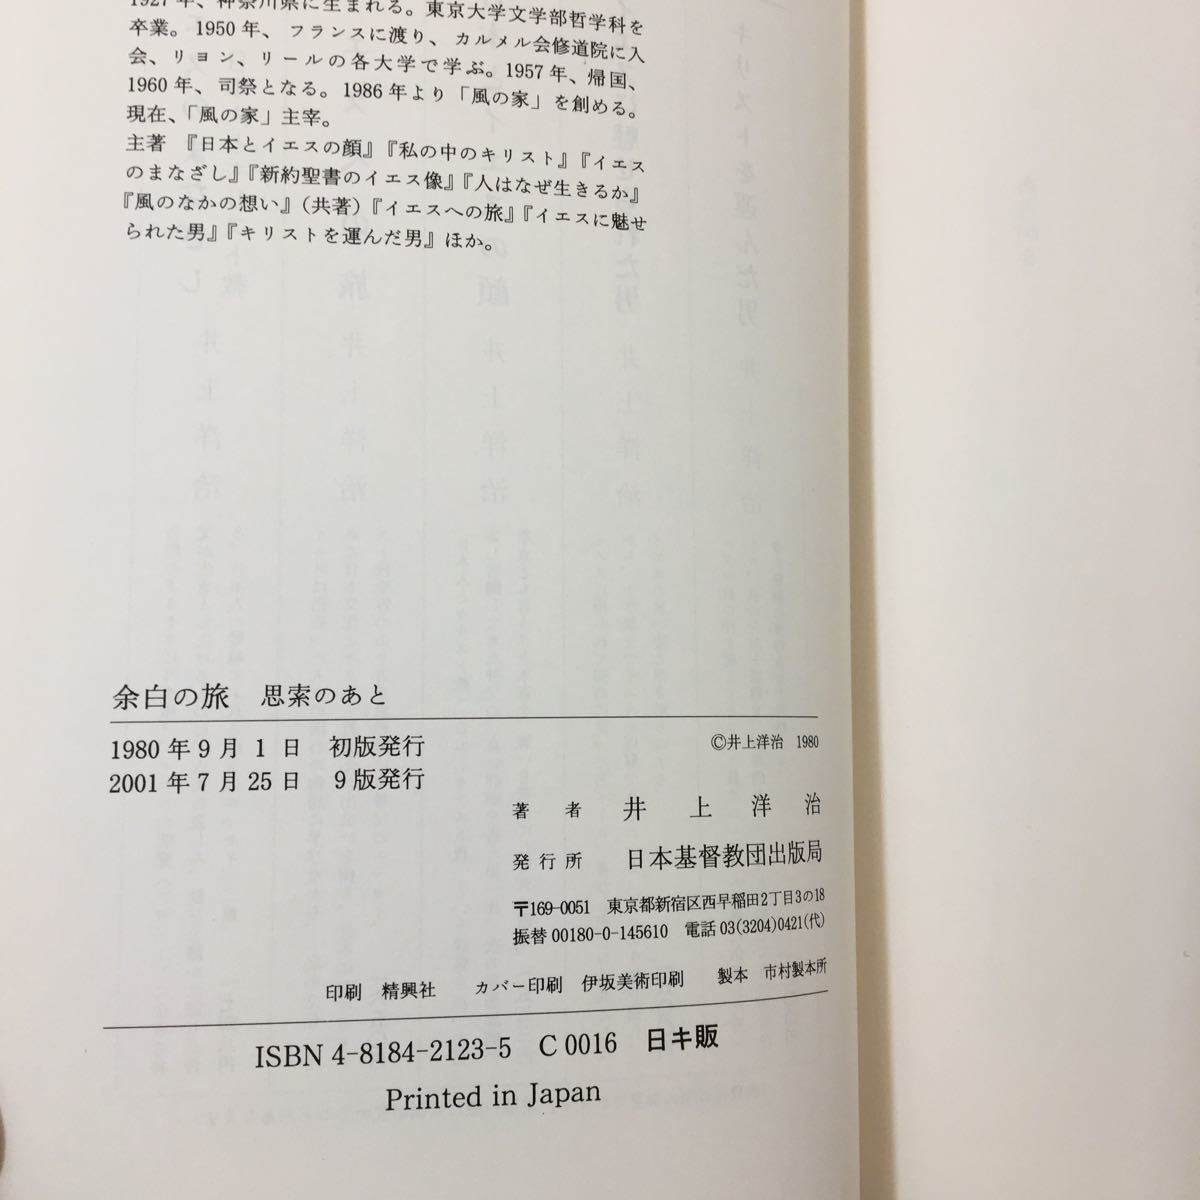 zaa-026★余白の旅―思索のあと 　井上 洋治 (著) (日本語) 単行本 1980/1/1